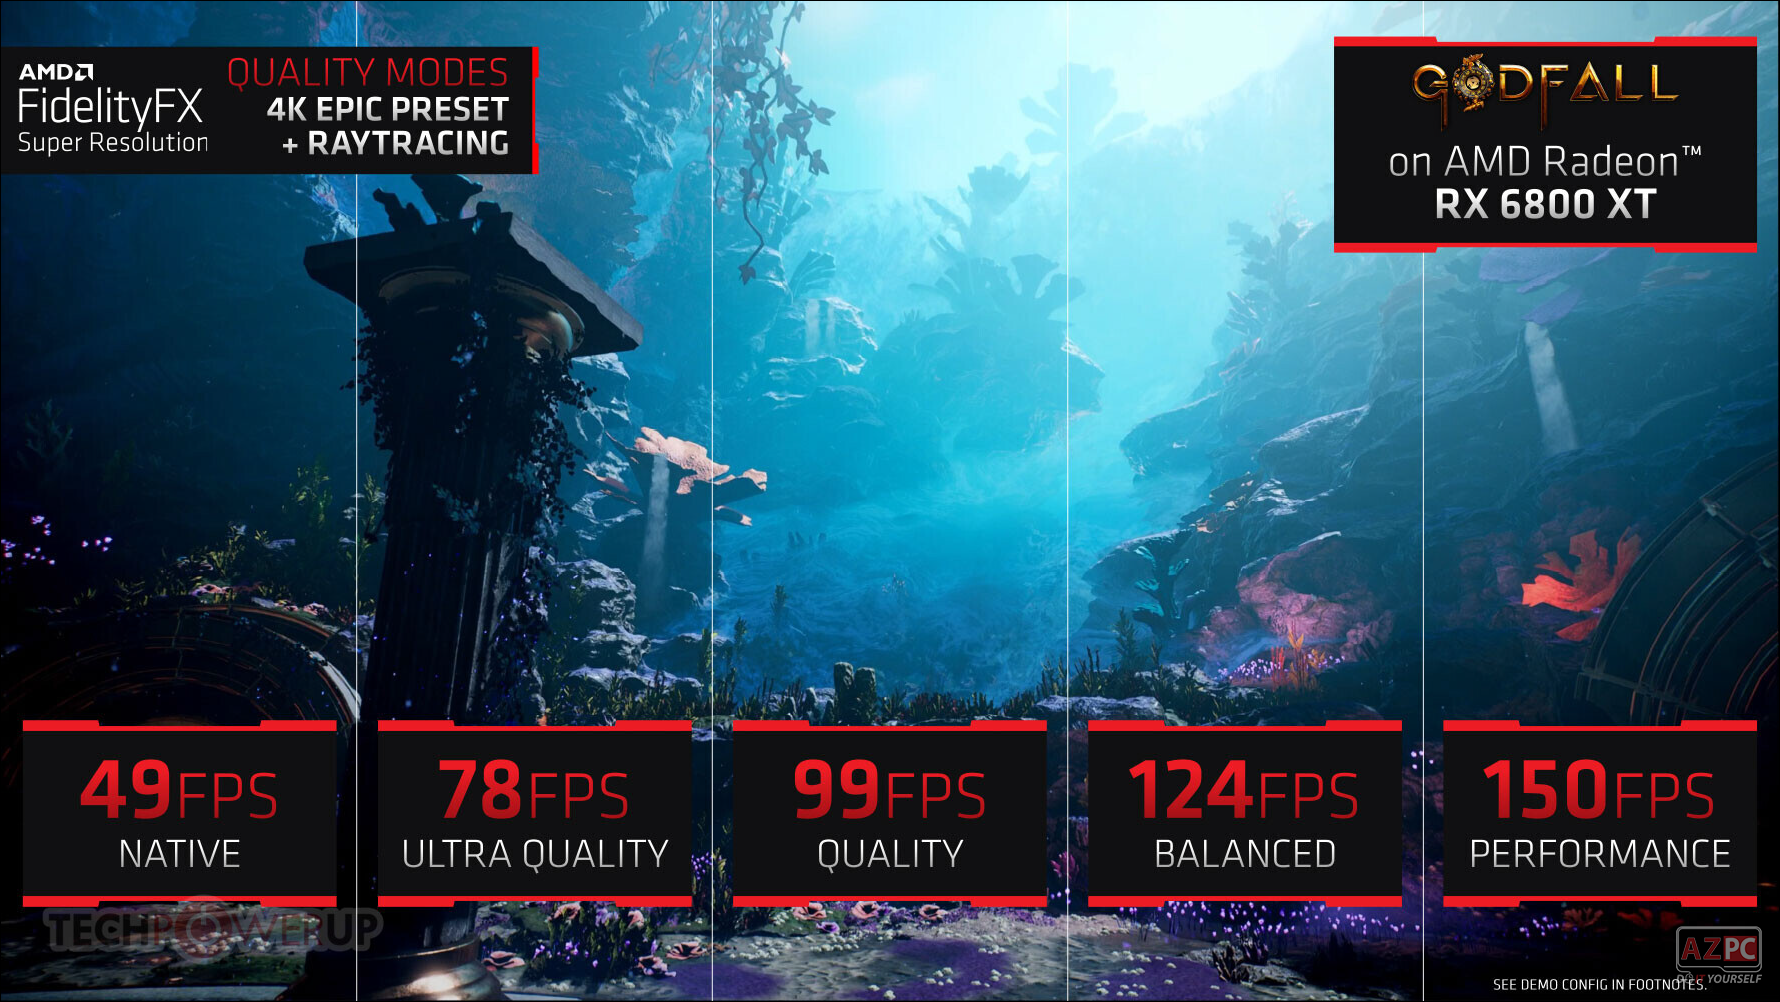 AMD Super Resolution